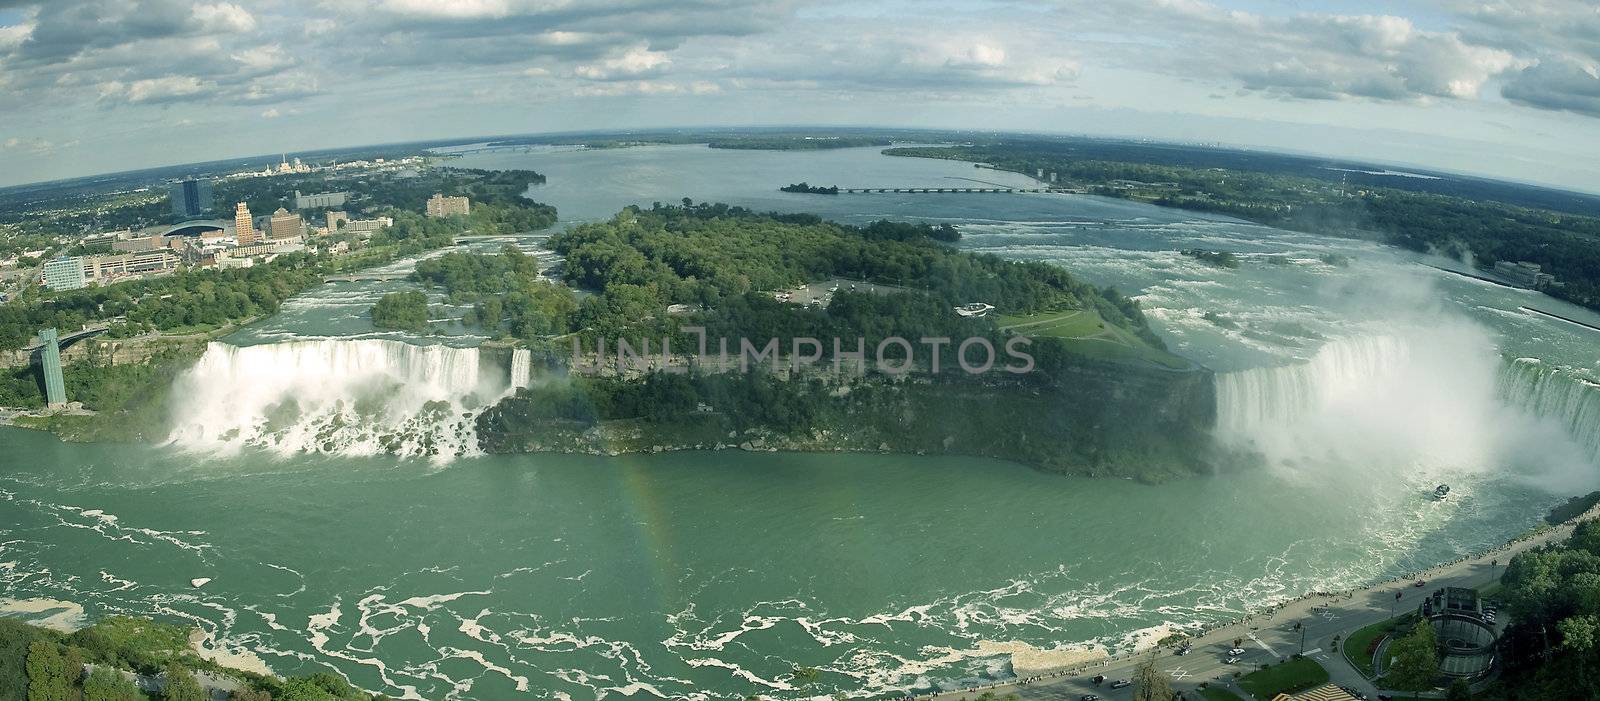 Niagara falls panorama photo taken from canadian side